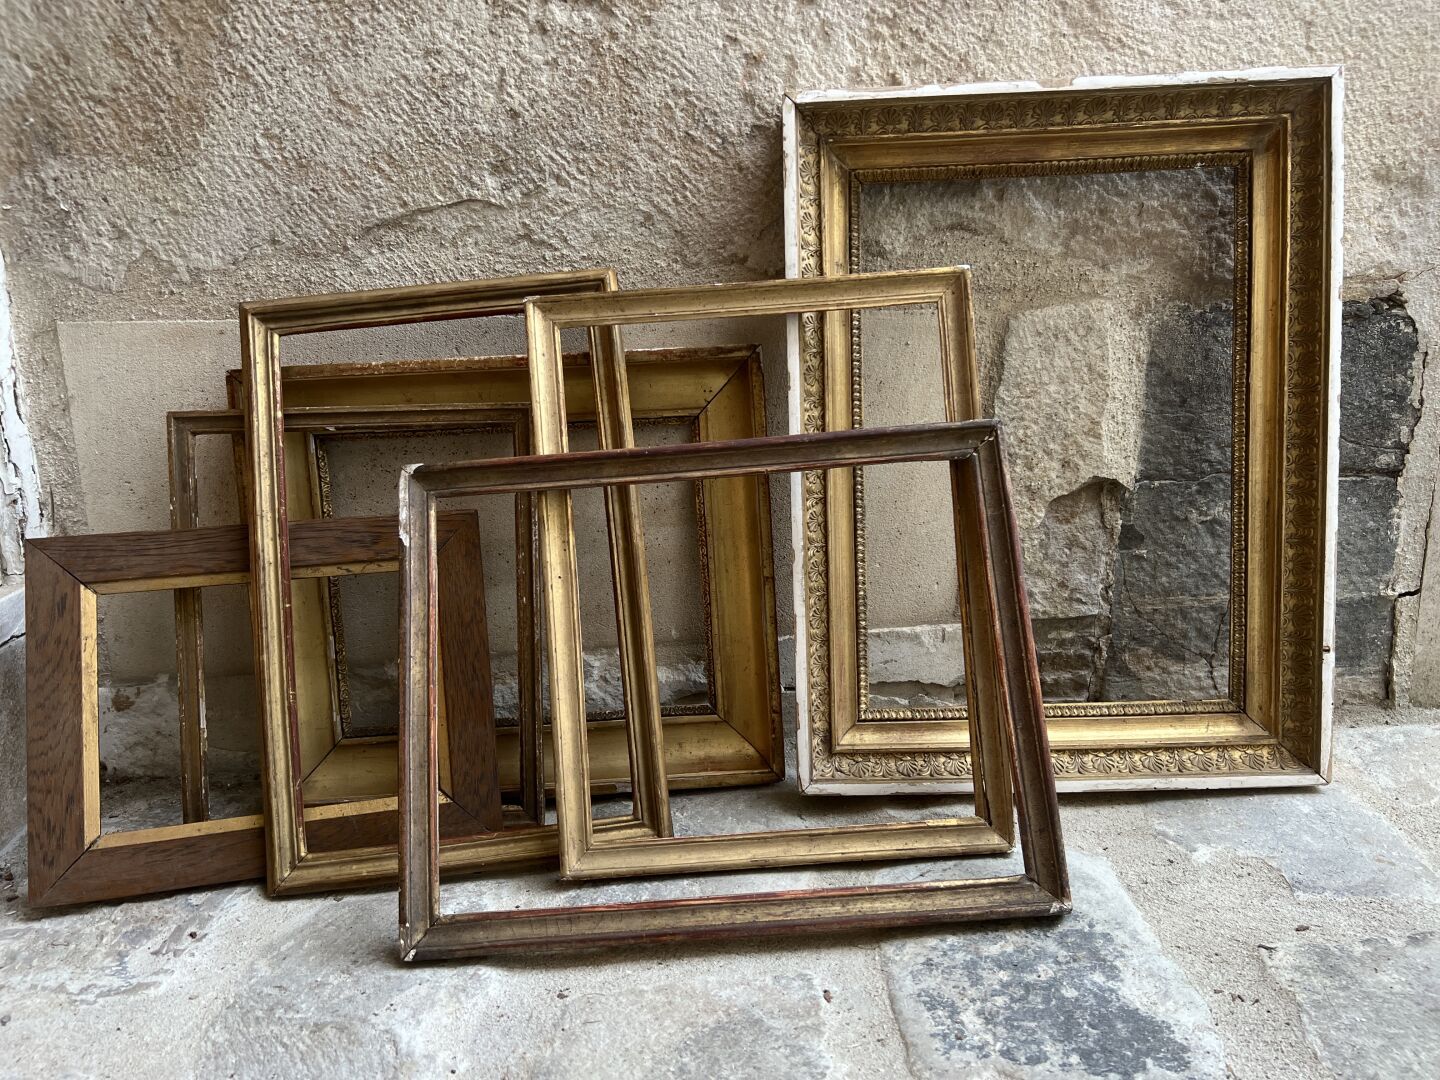 Null Set of 6 frames including a gilded Empire frame
46 x 35 cm